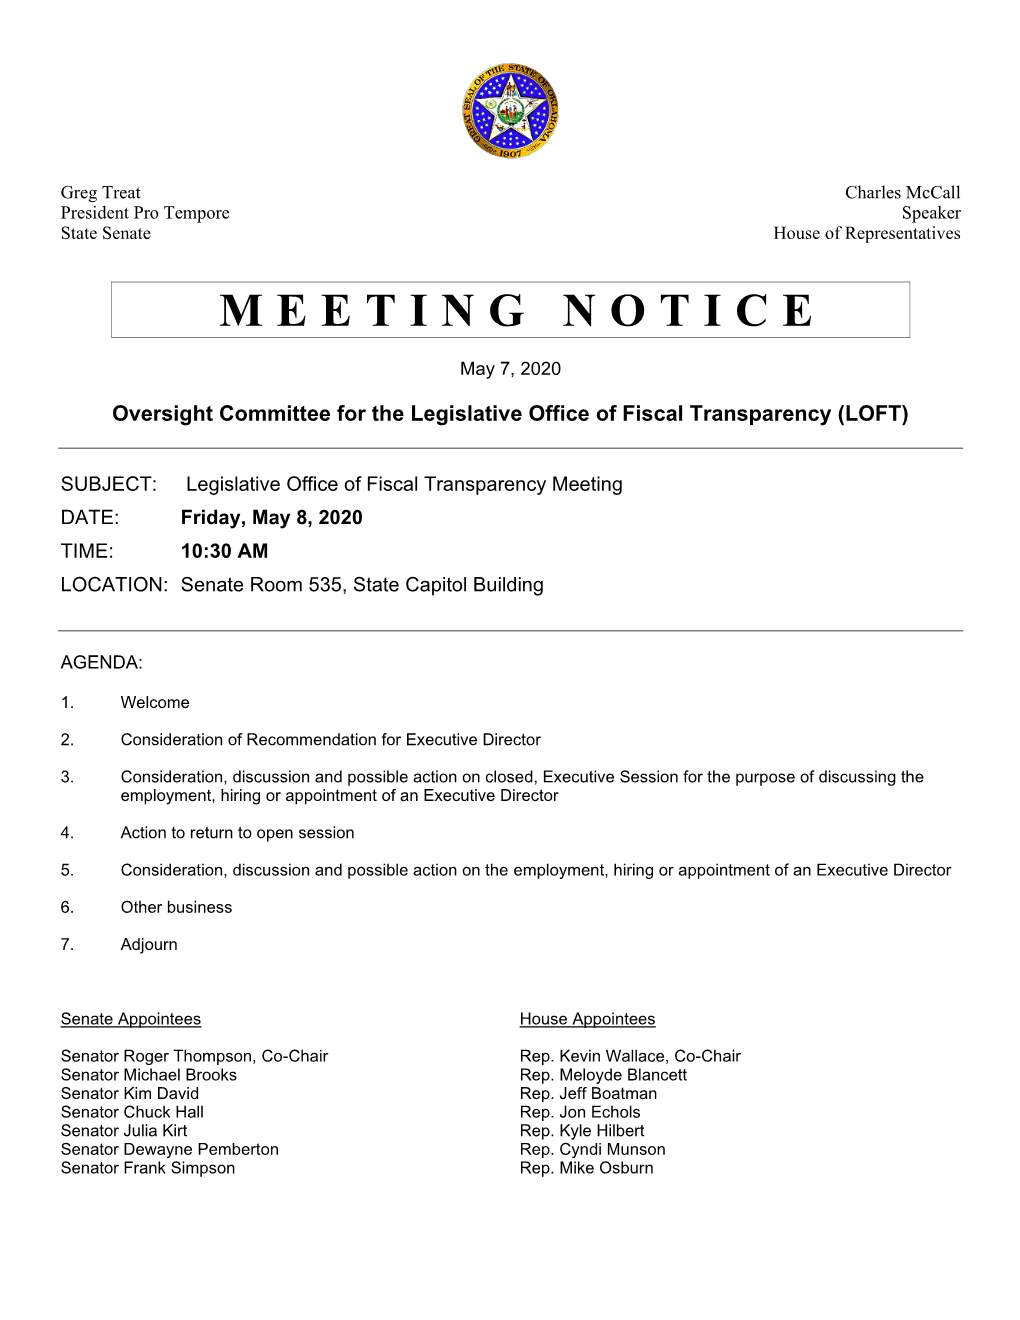 Meeting Notice